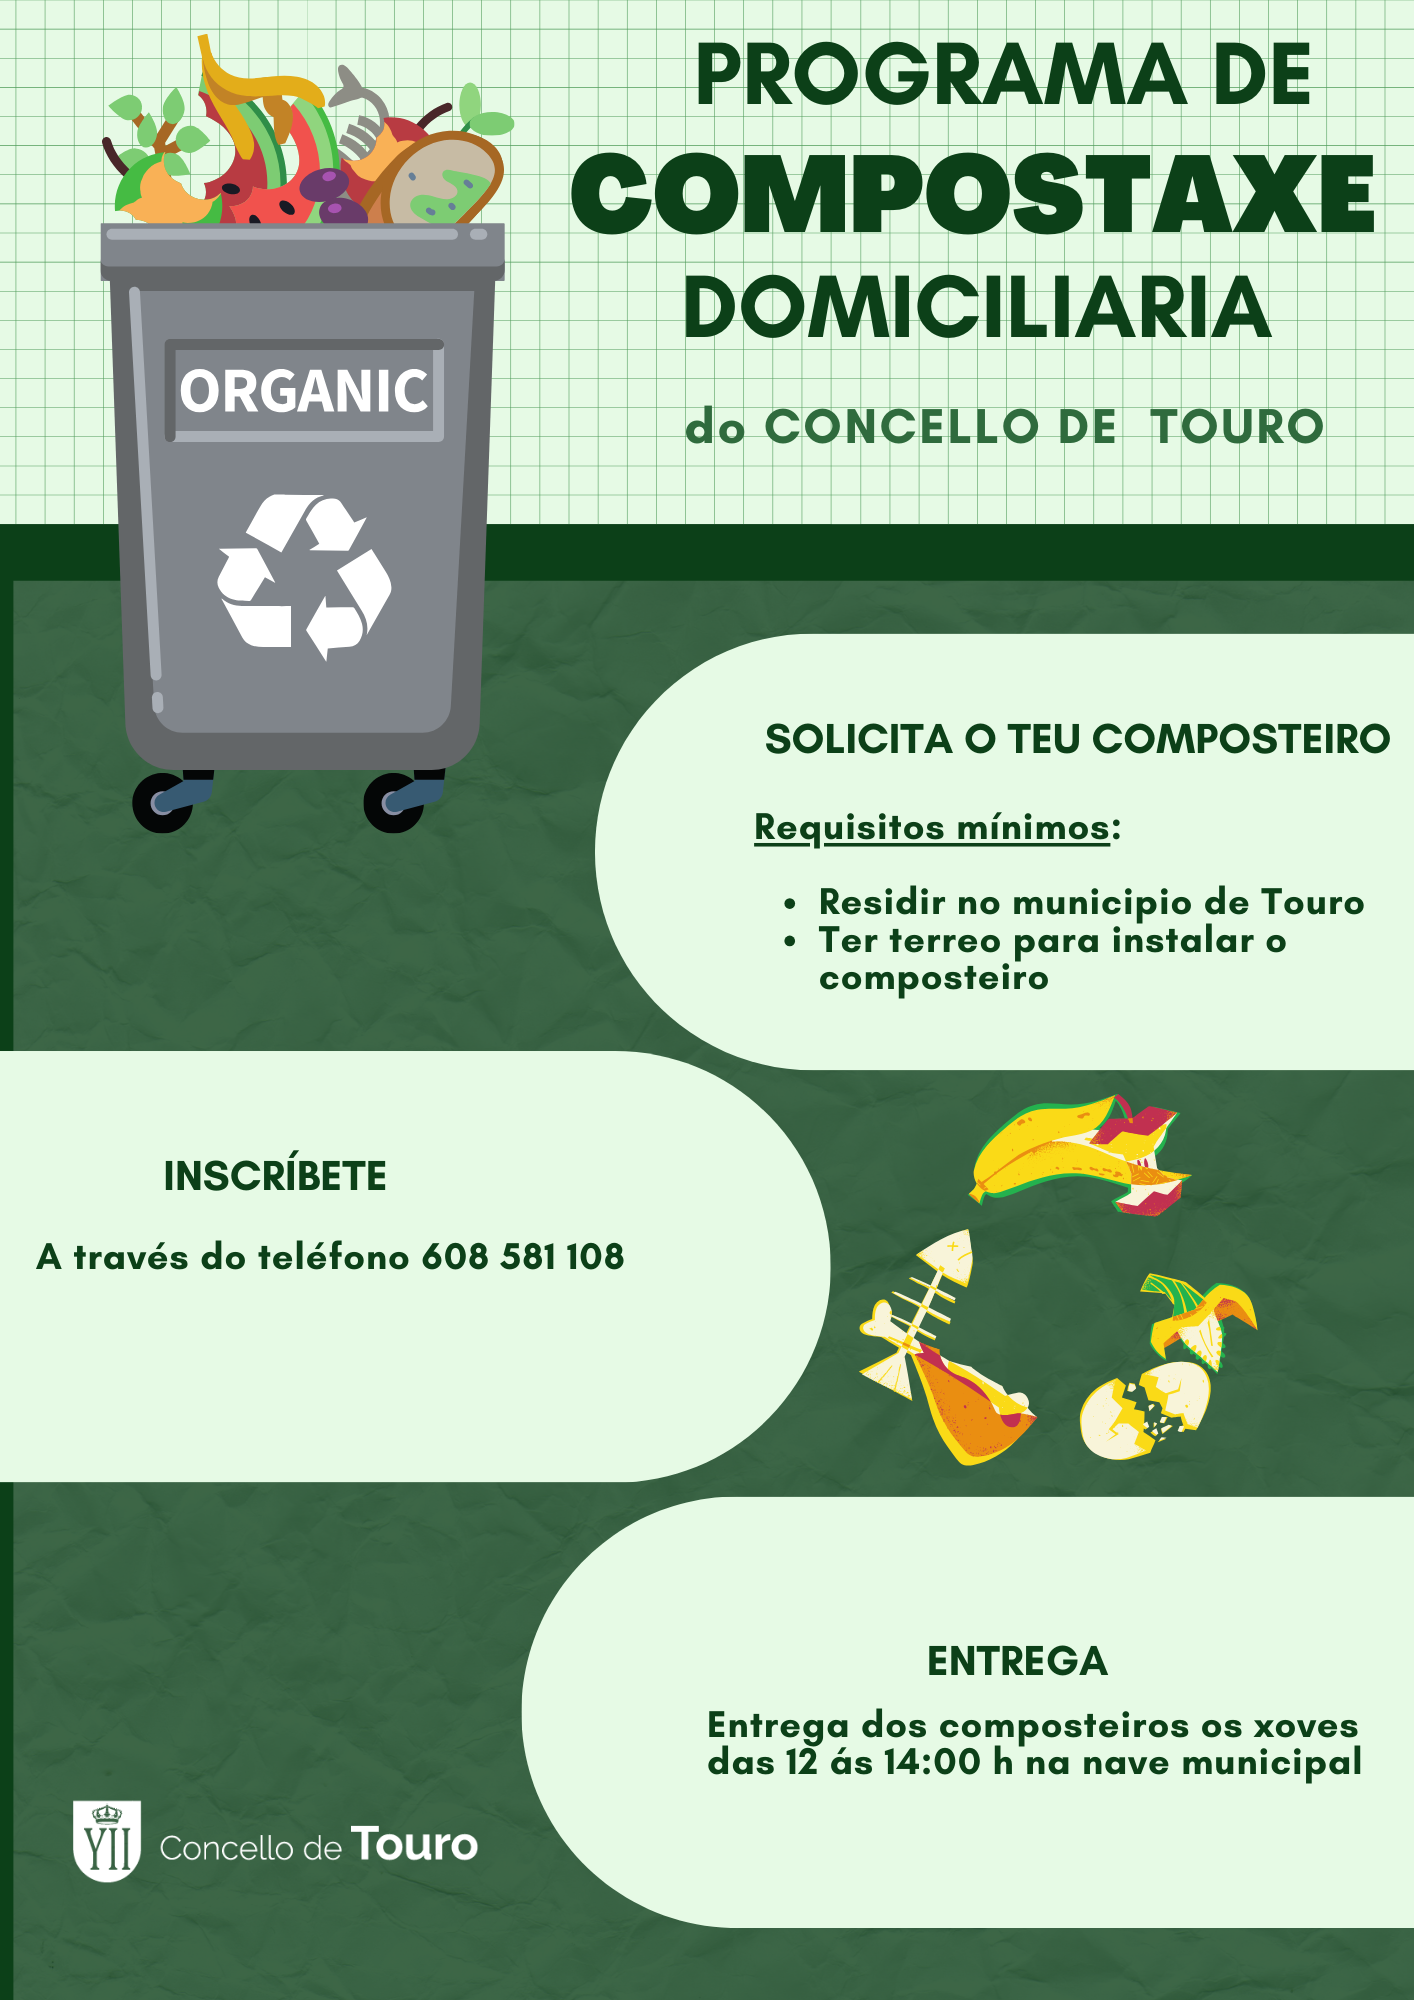 PROGRAMA DE COMPOSTAXE DOMICILIARIA